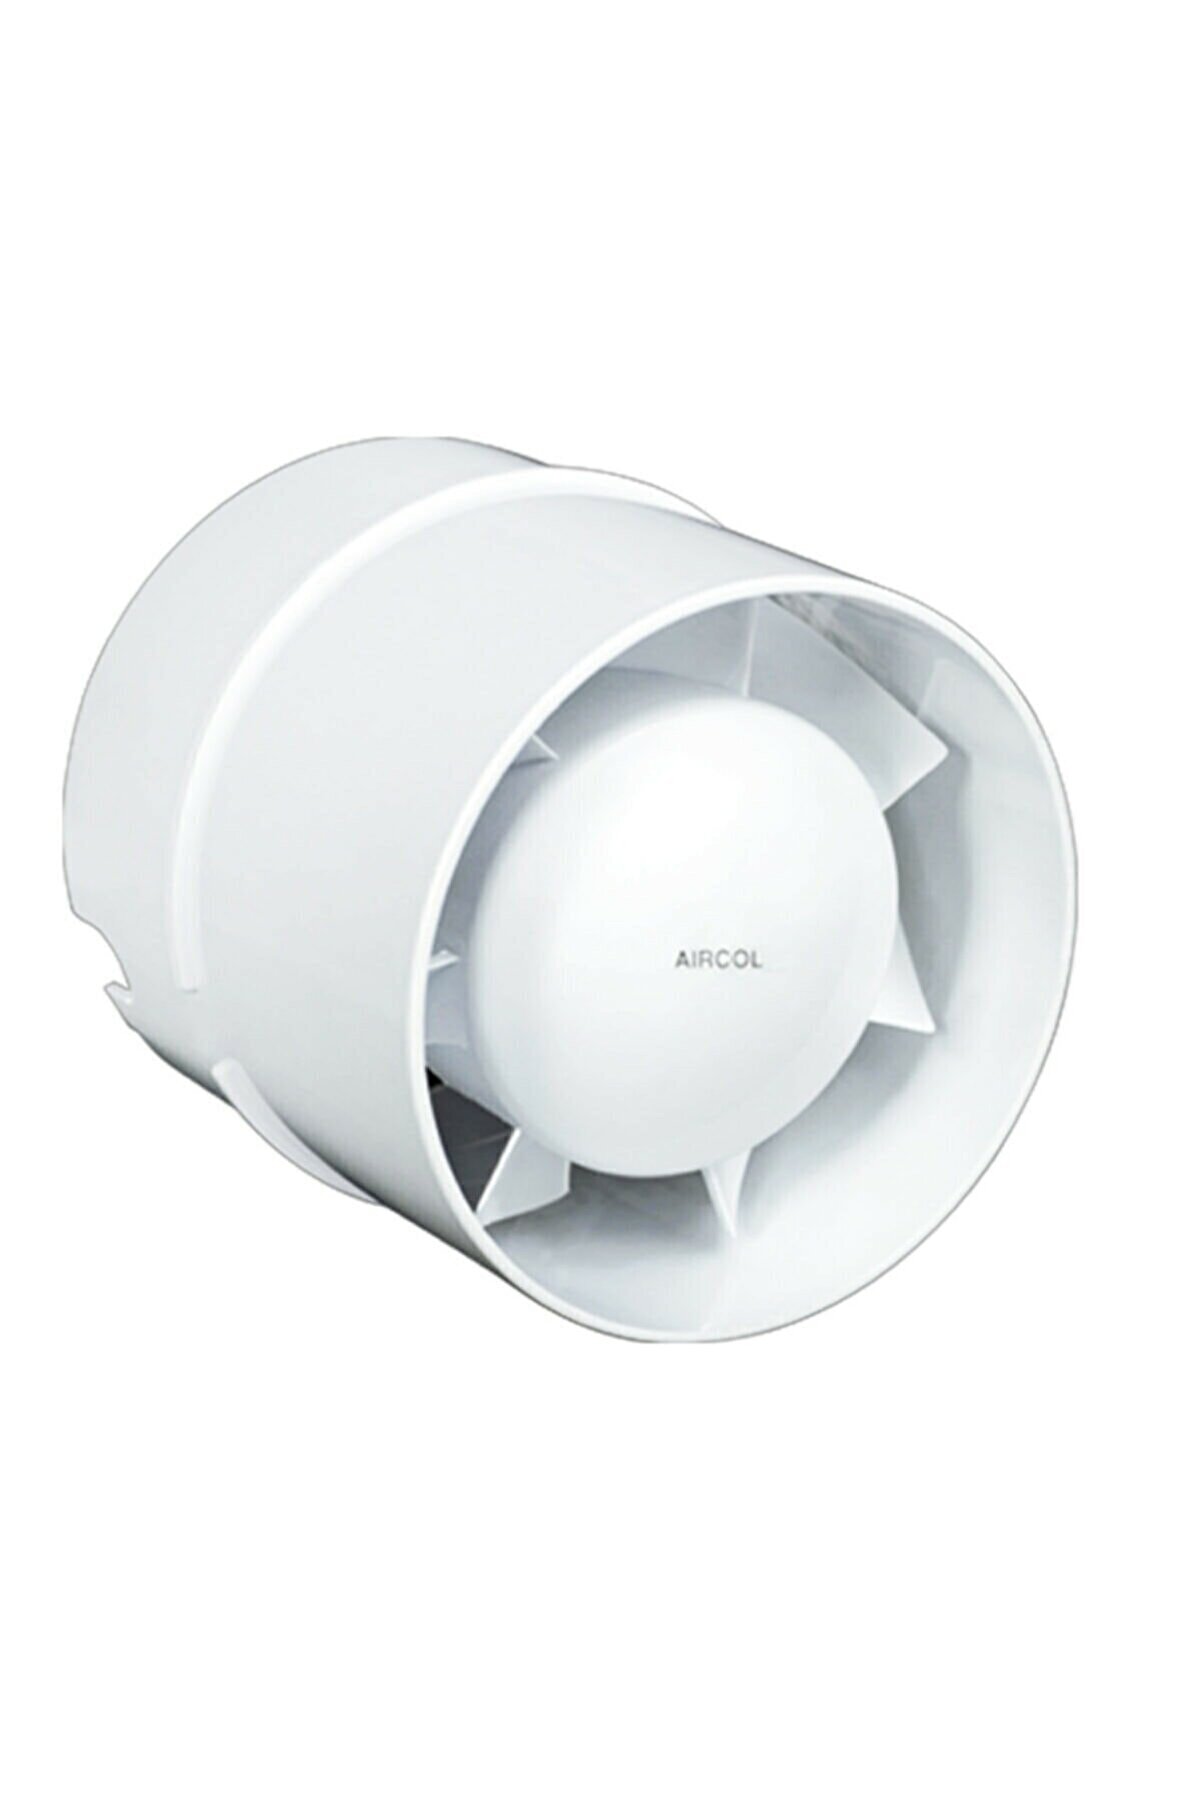 Aircol Sessiz Kanal Tipi Fan Plastik Banyo Tuvalet Baca Aspiratörü 100 M³/h 100'lük Aırcol-100kt